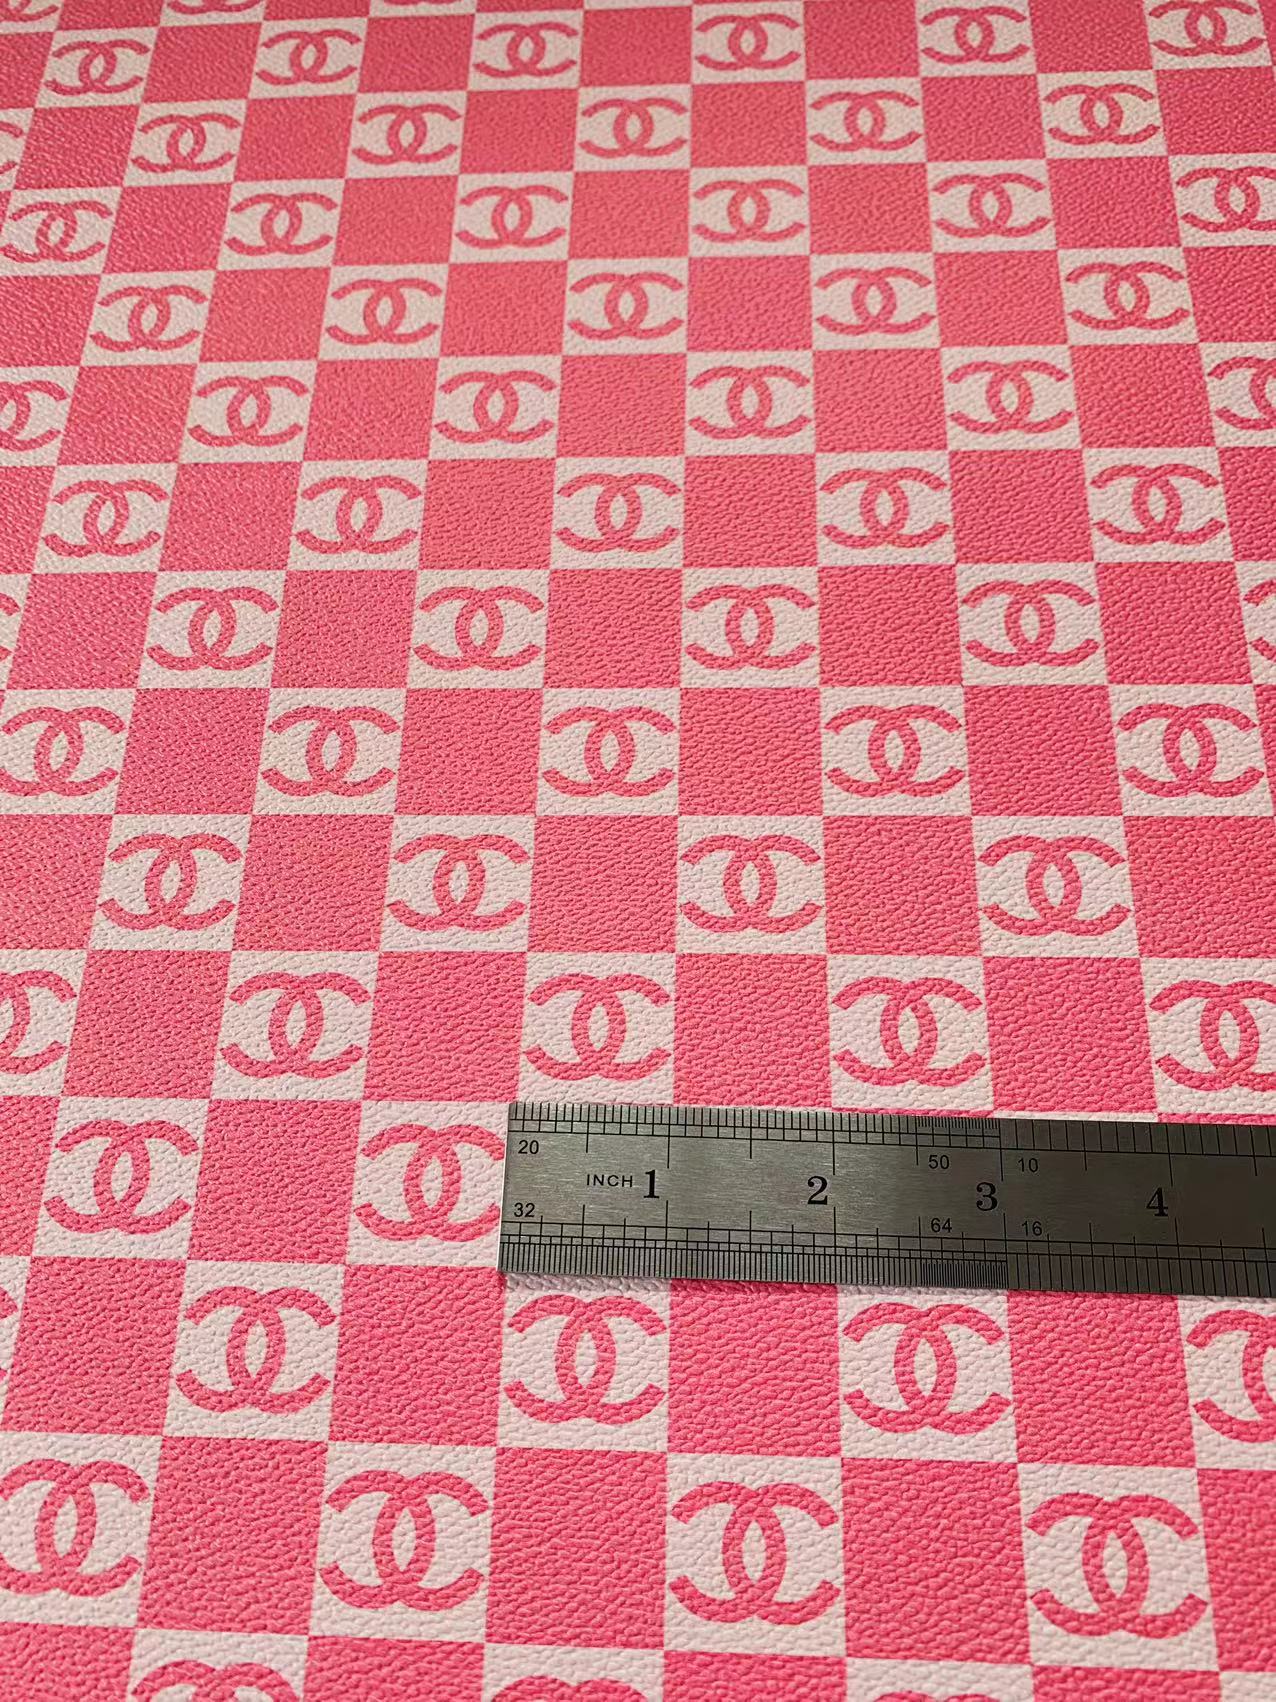 chanel print fabric